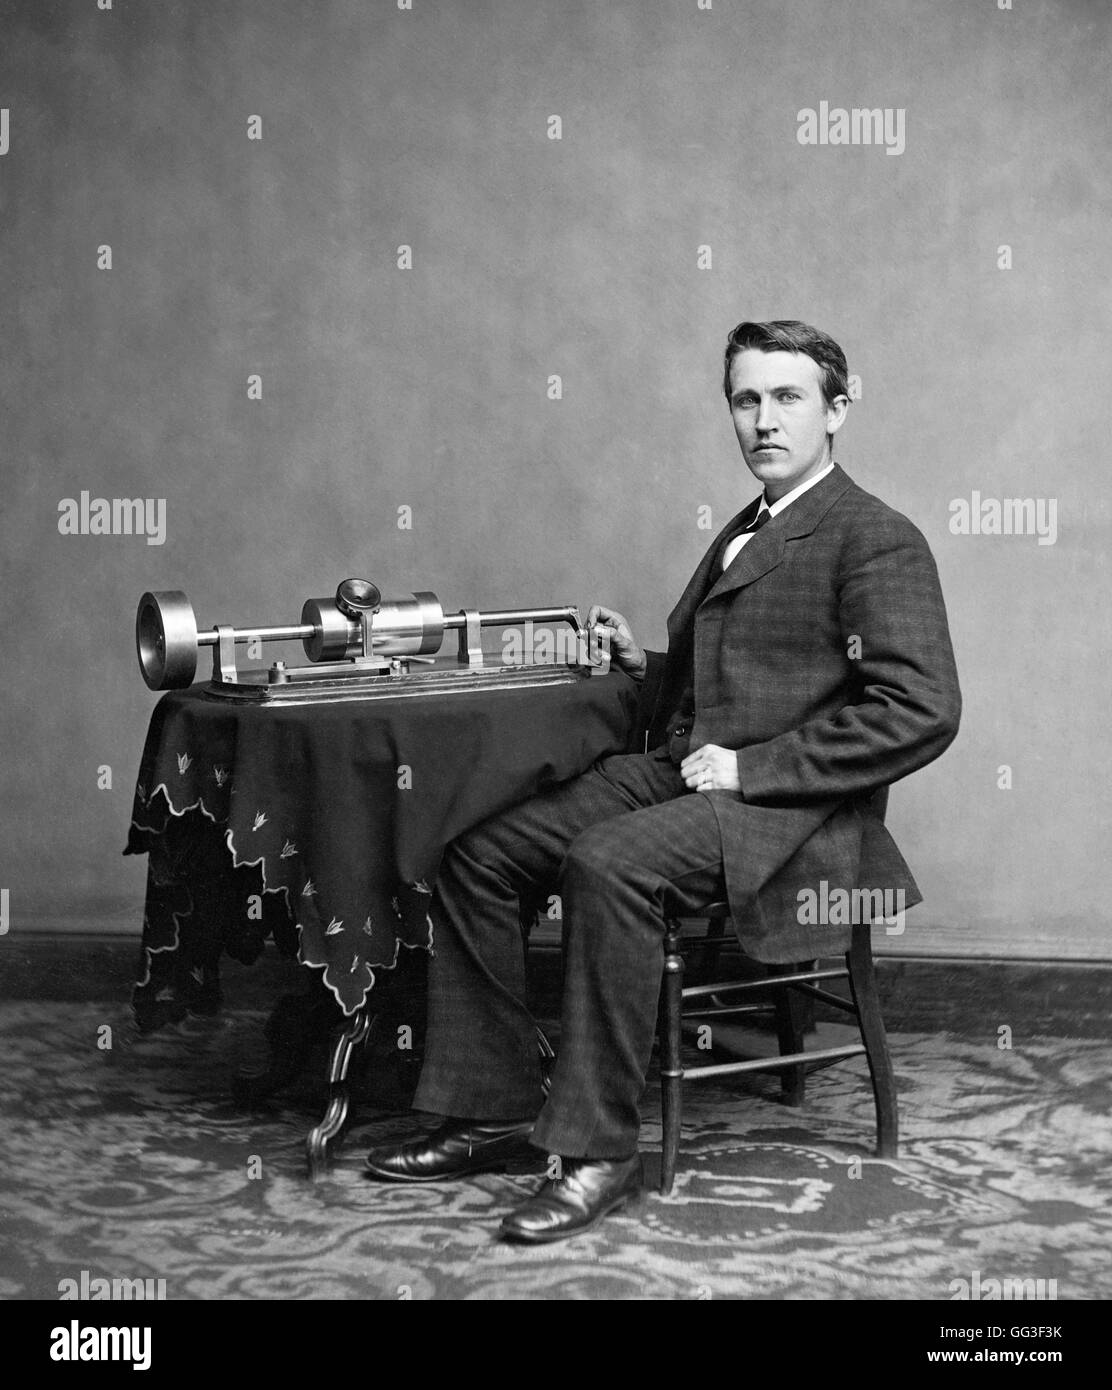 Thomas Edison. Portrait of the American inventor and businessman,Thomas Alva Edison (1847-1931), with his phonograph. Portrait c.1878. Stock Photo